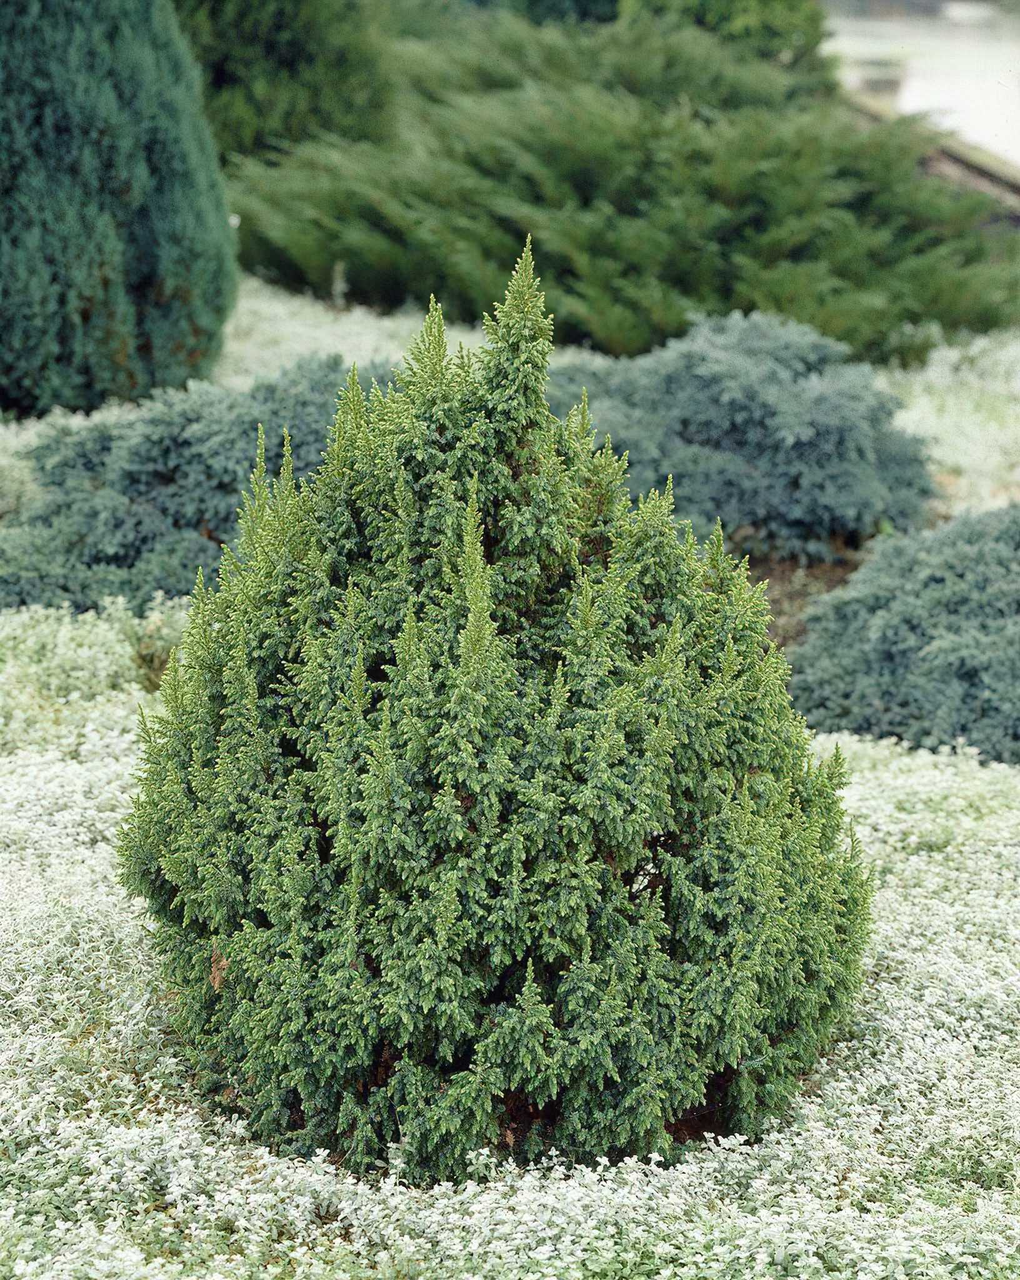 Ялівець лускатий Loderi 4 річний, Ялівець лускатий Лодери, Juniperus squamata Loderi